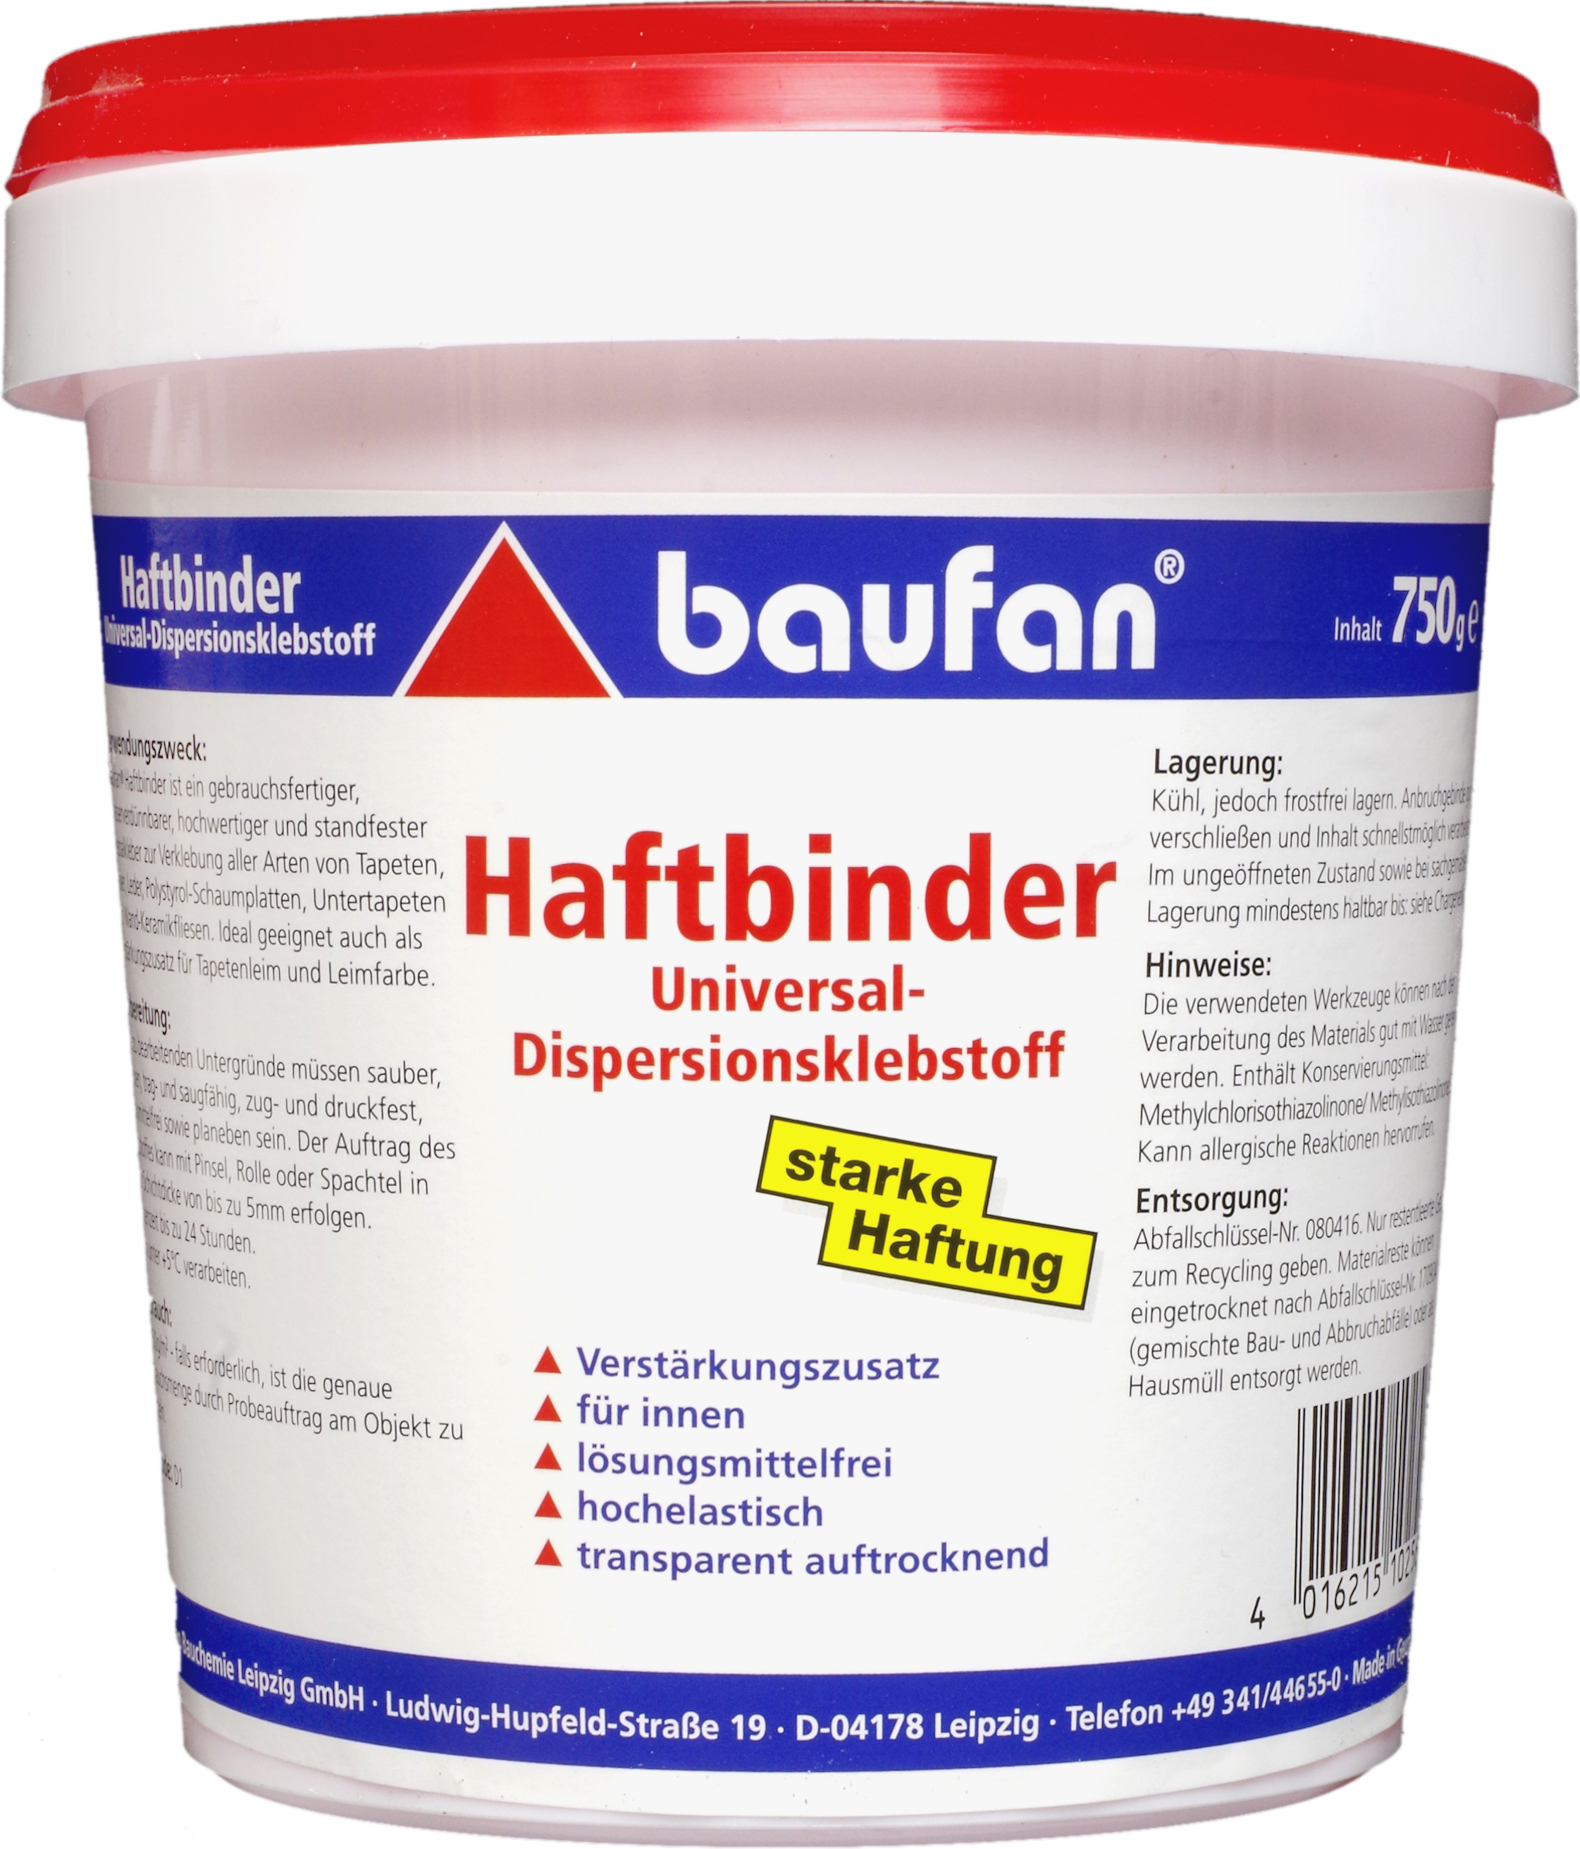 BAUFAN BAUCHEMIE Haftbinder 750g 